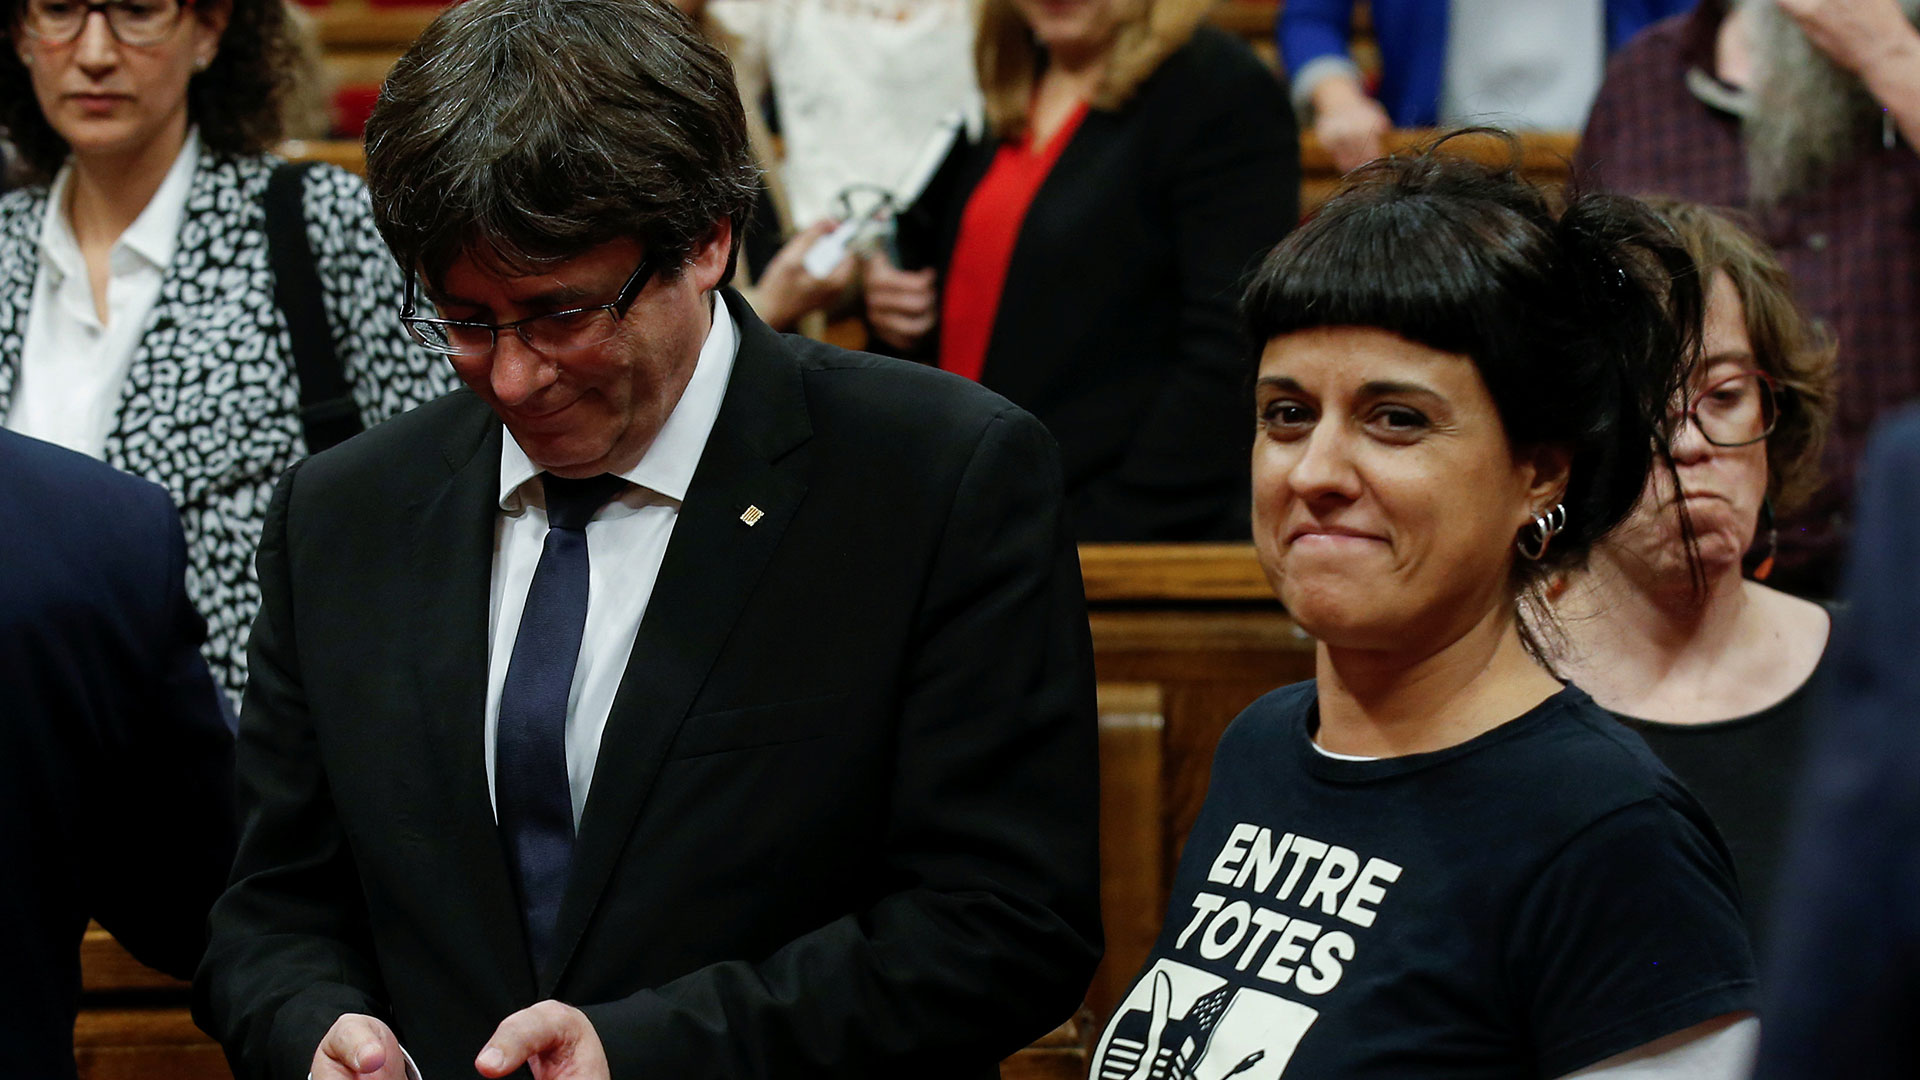 La CUP exige por carta a Puigdemont proclamar ya la república catalana